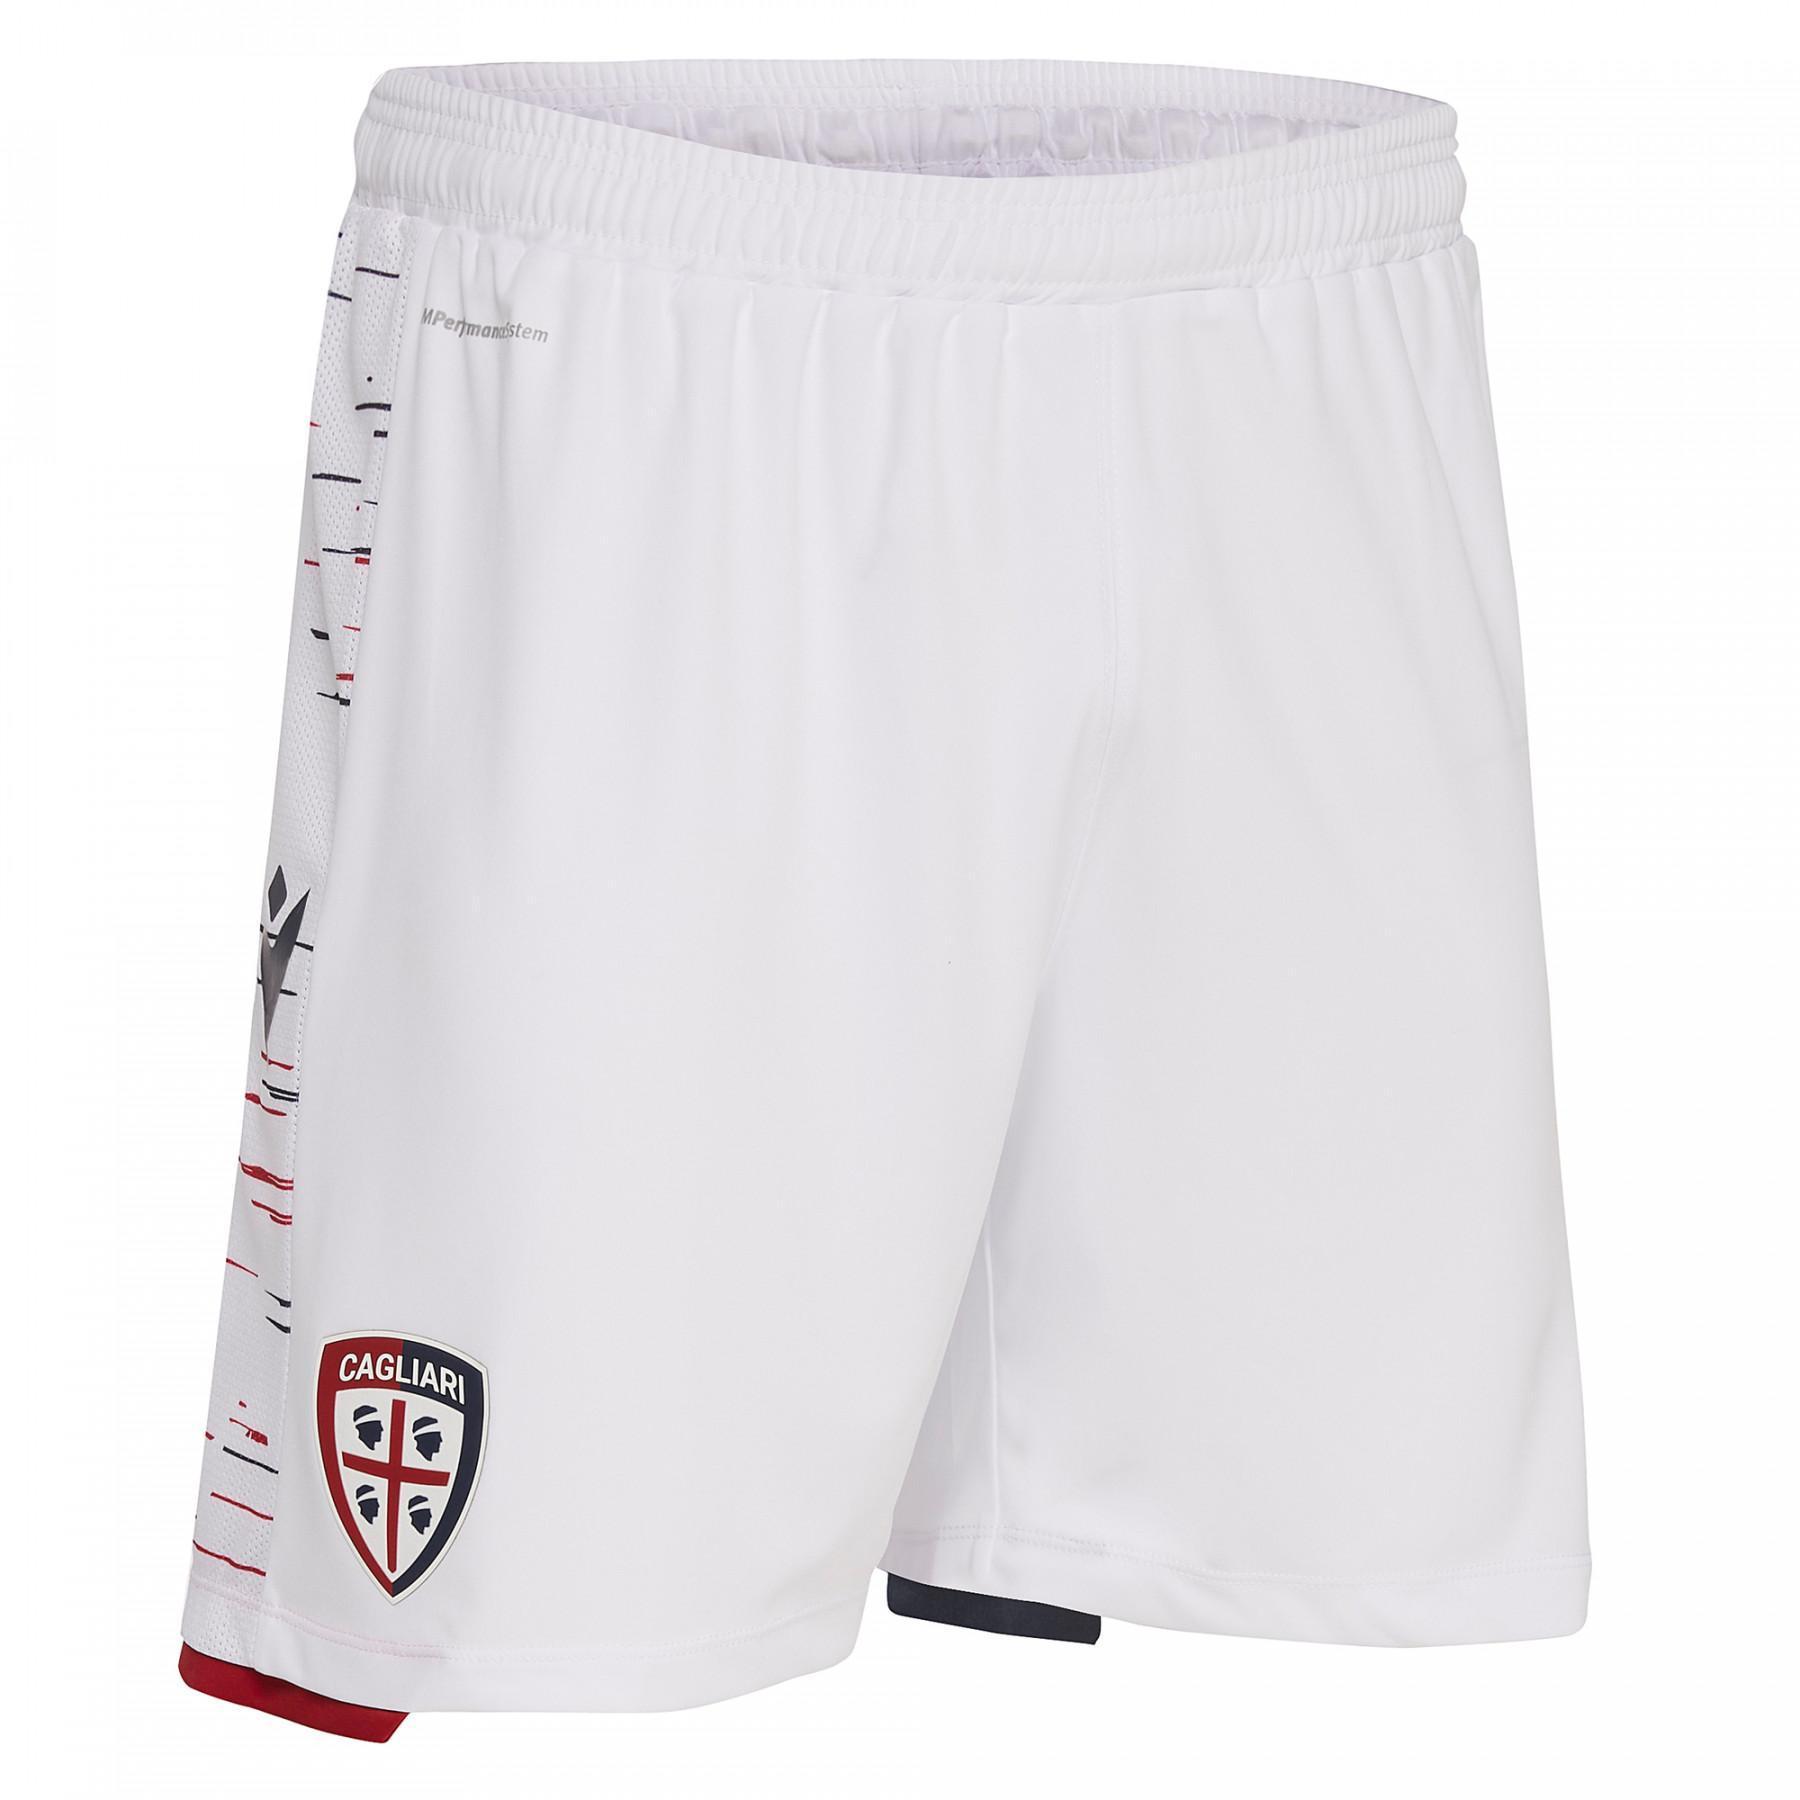 Pantalones cortos para exteriores Cagliari Calcio 19/20